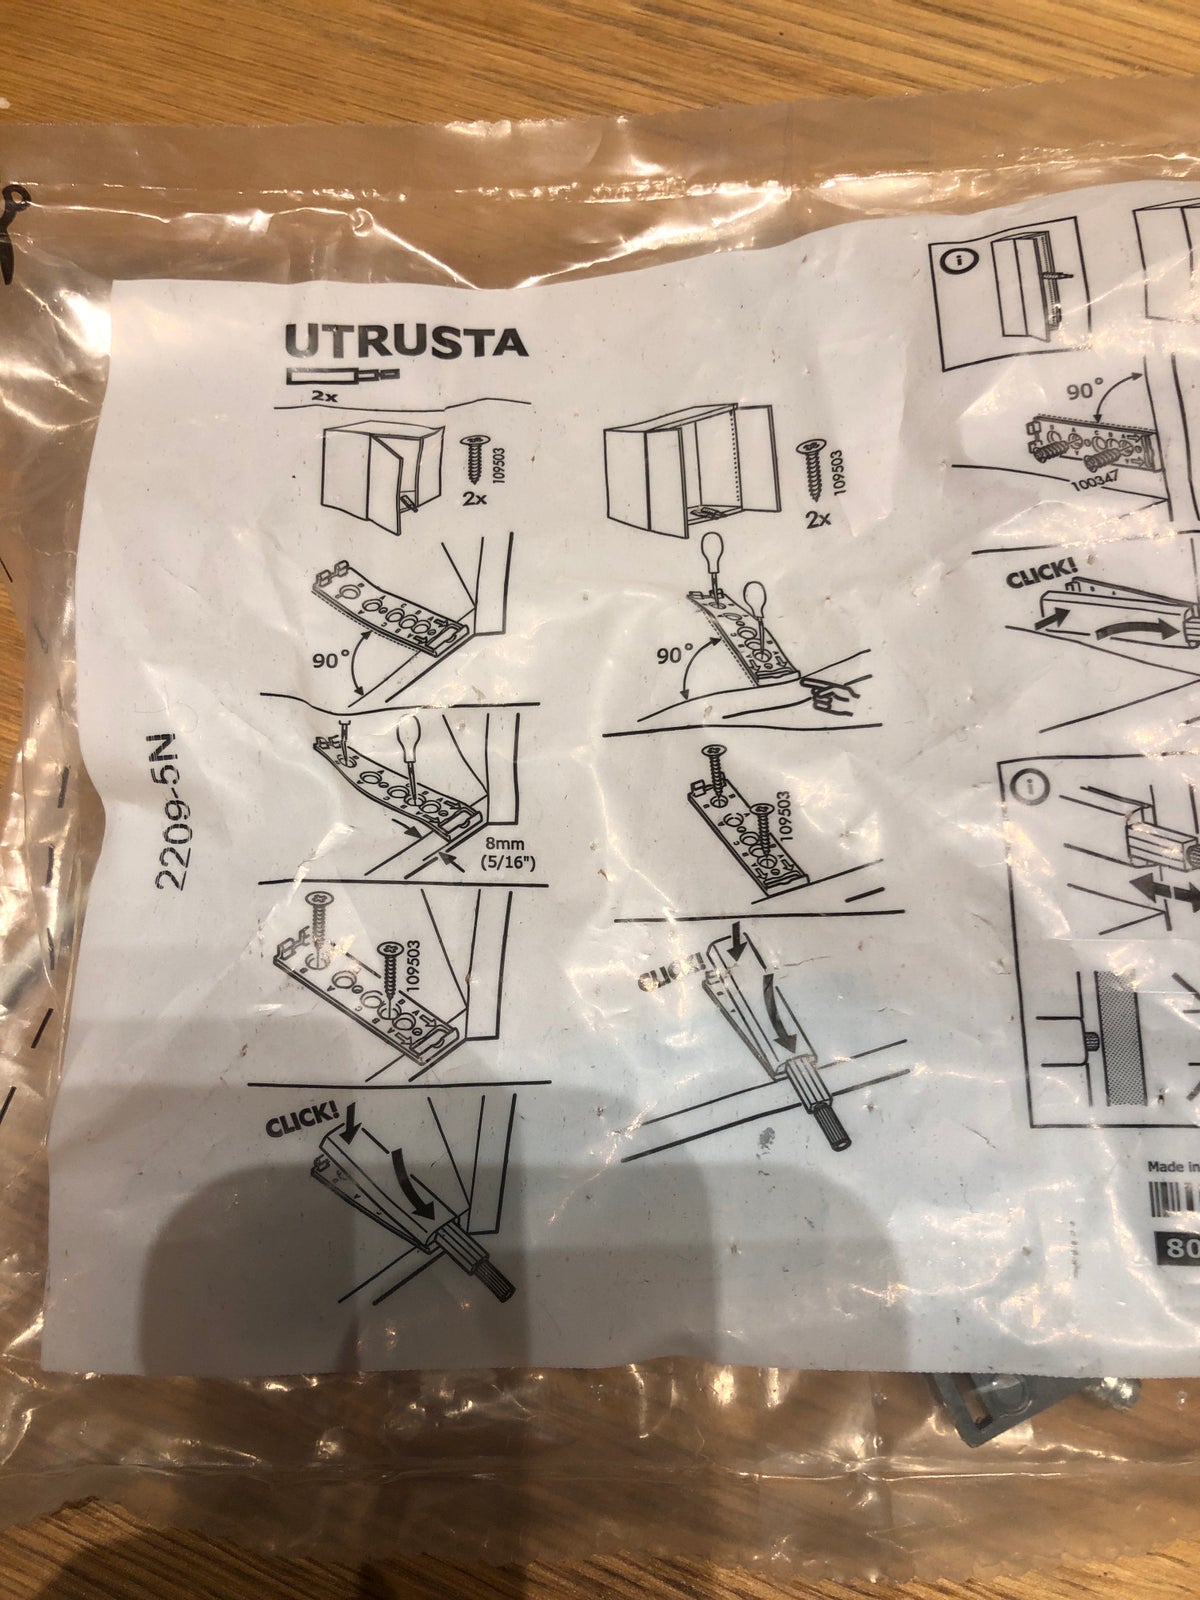 Andet, Ikea utrusta åbnebeslag